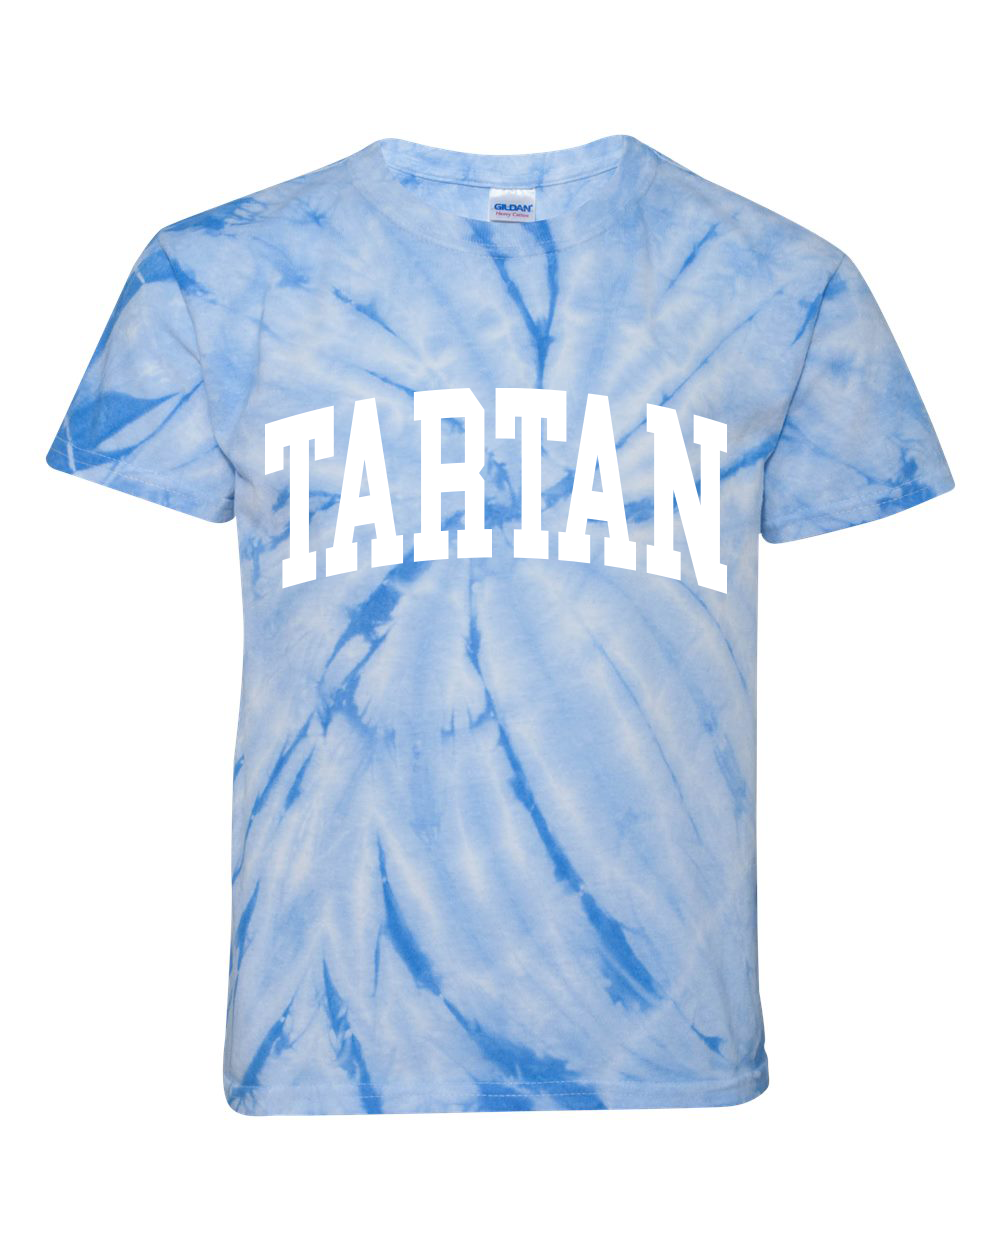 Tartan Blue Tie Dye Youth T-Shirt